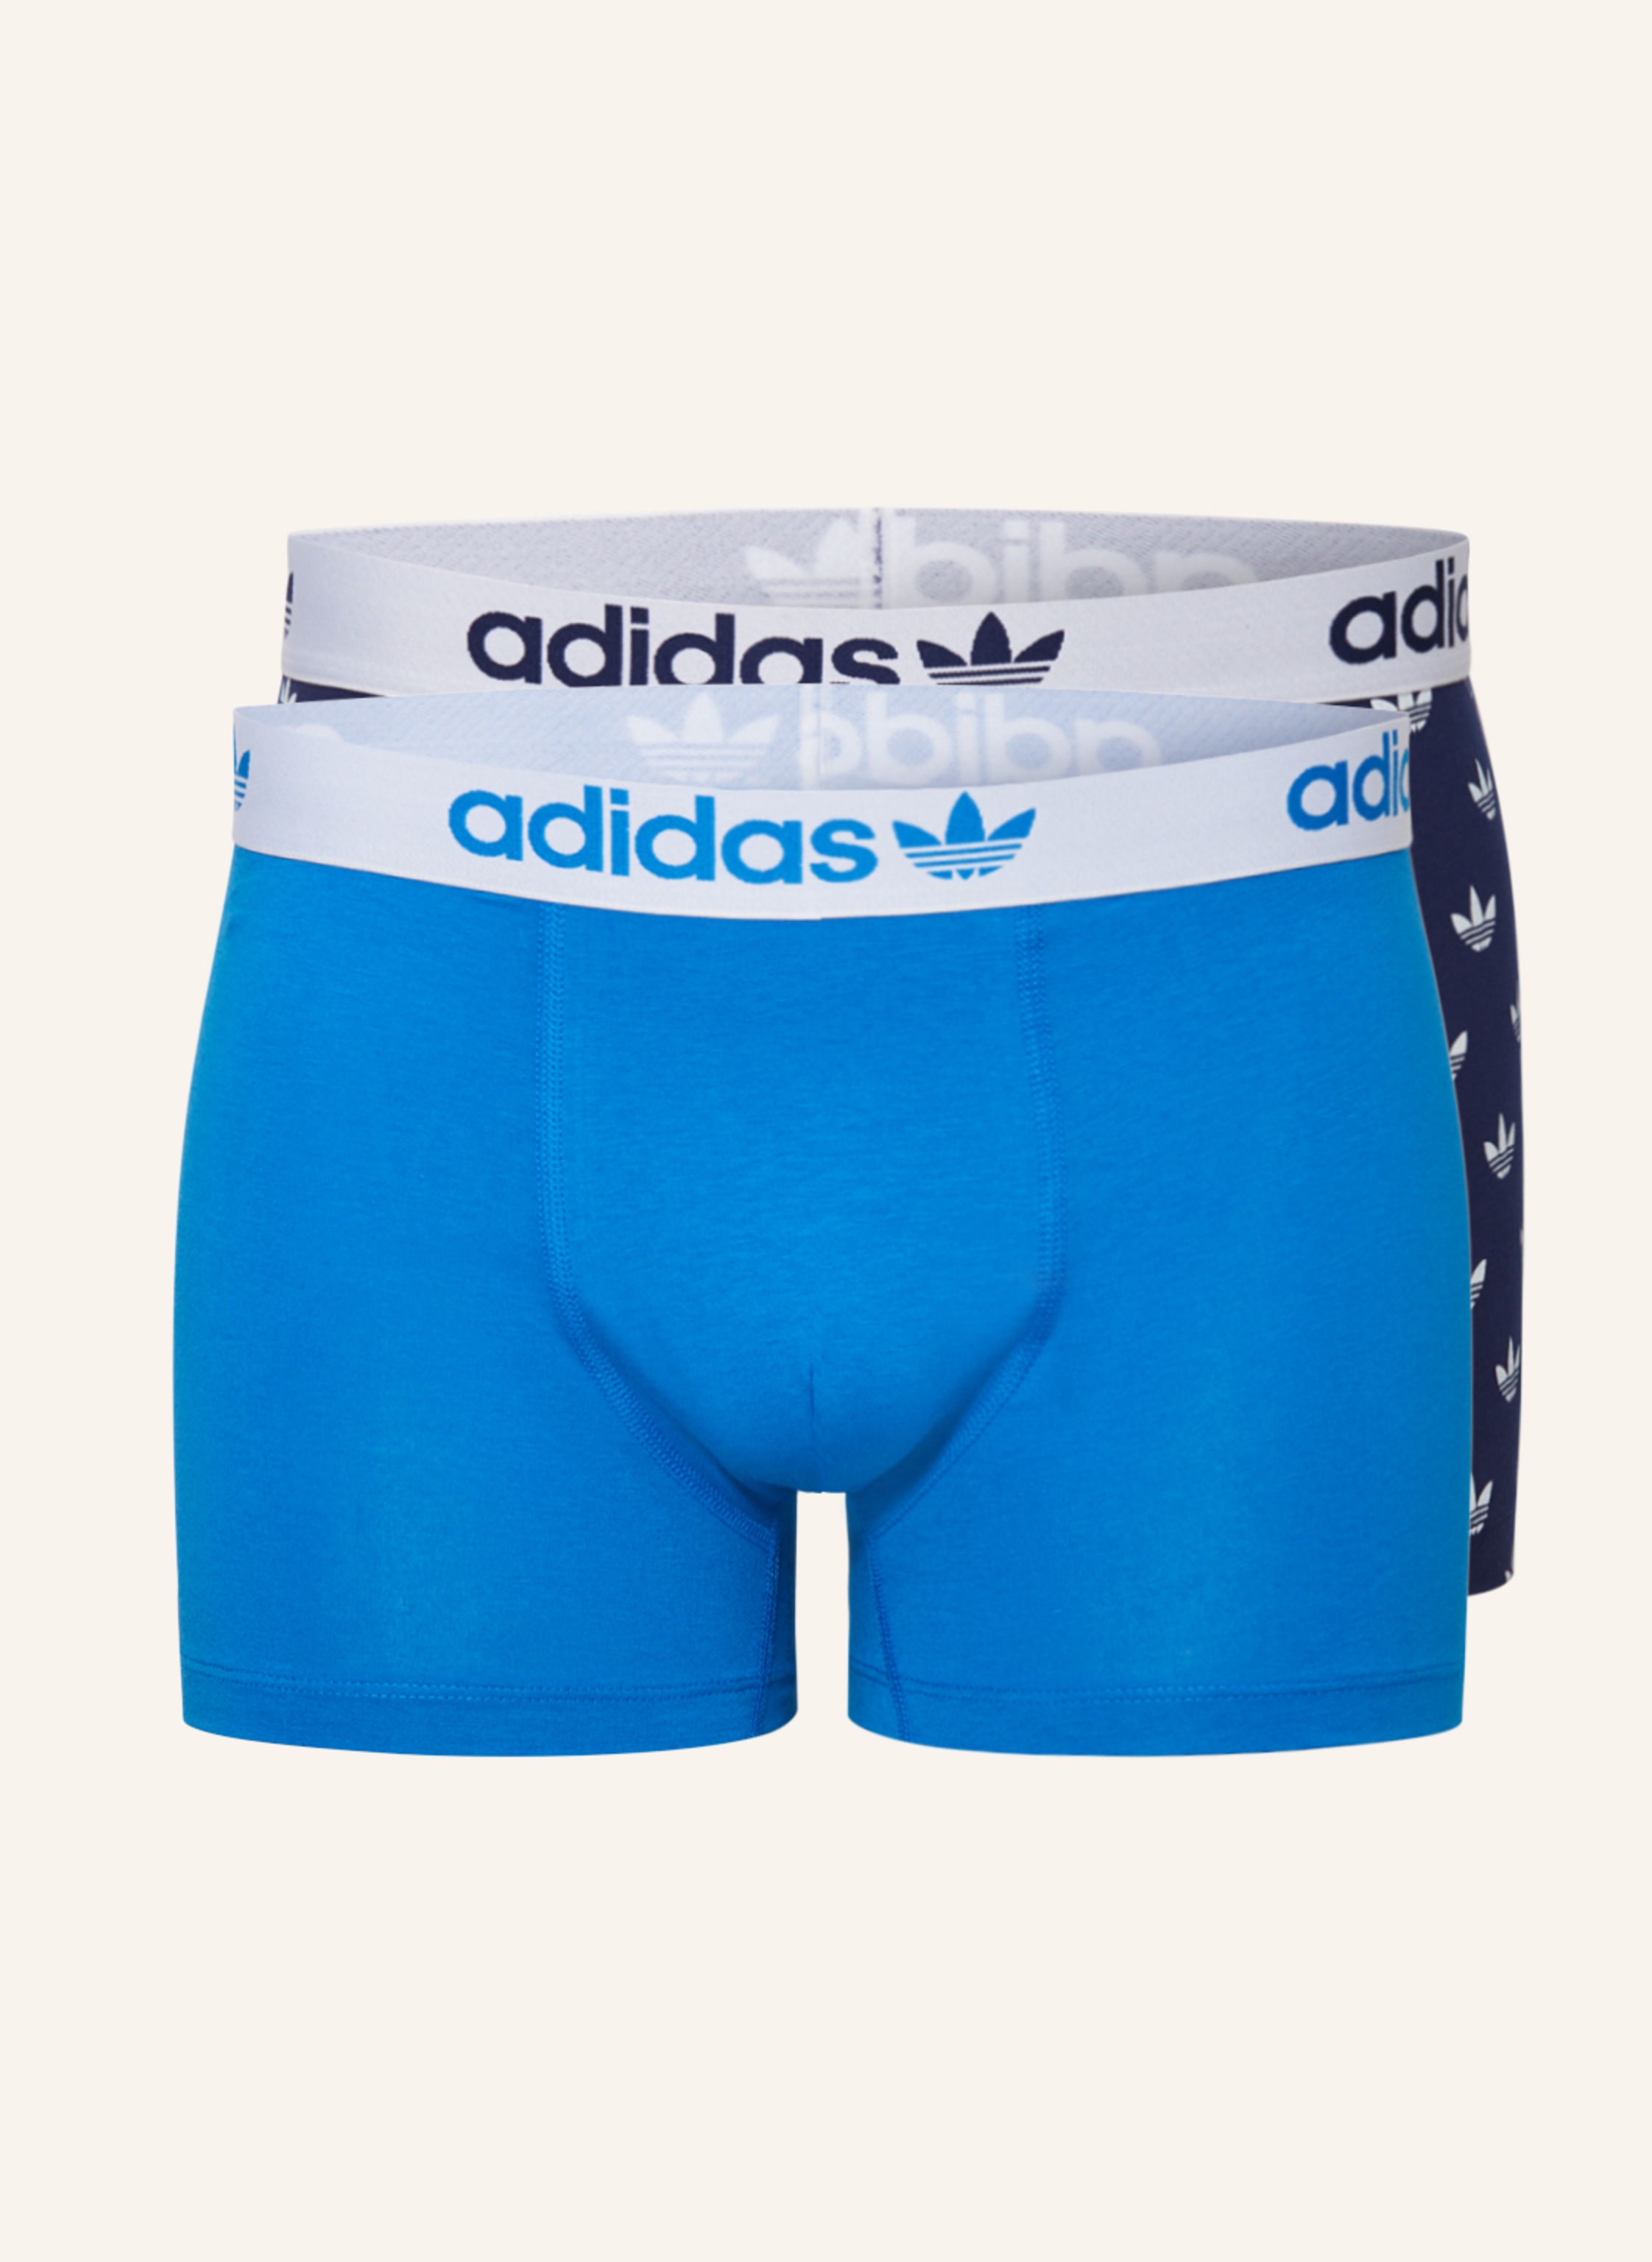 adidas Originals Boxershorts blau/ 2er-Pack dunkelblau/ in weiss